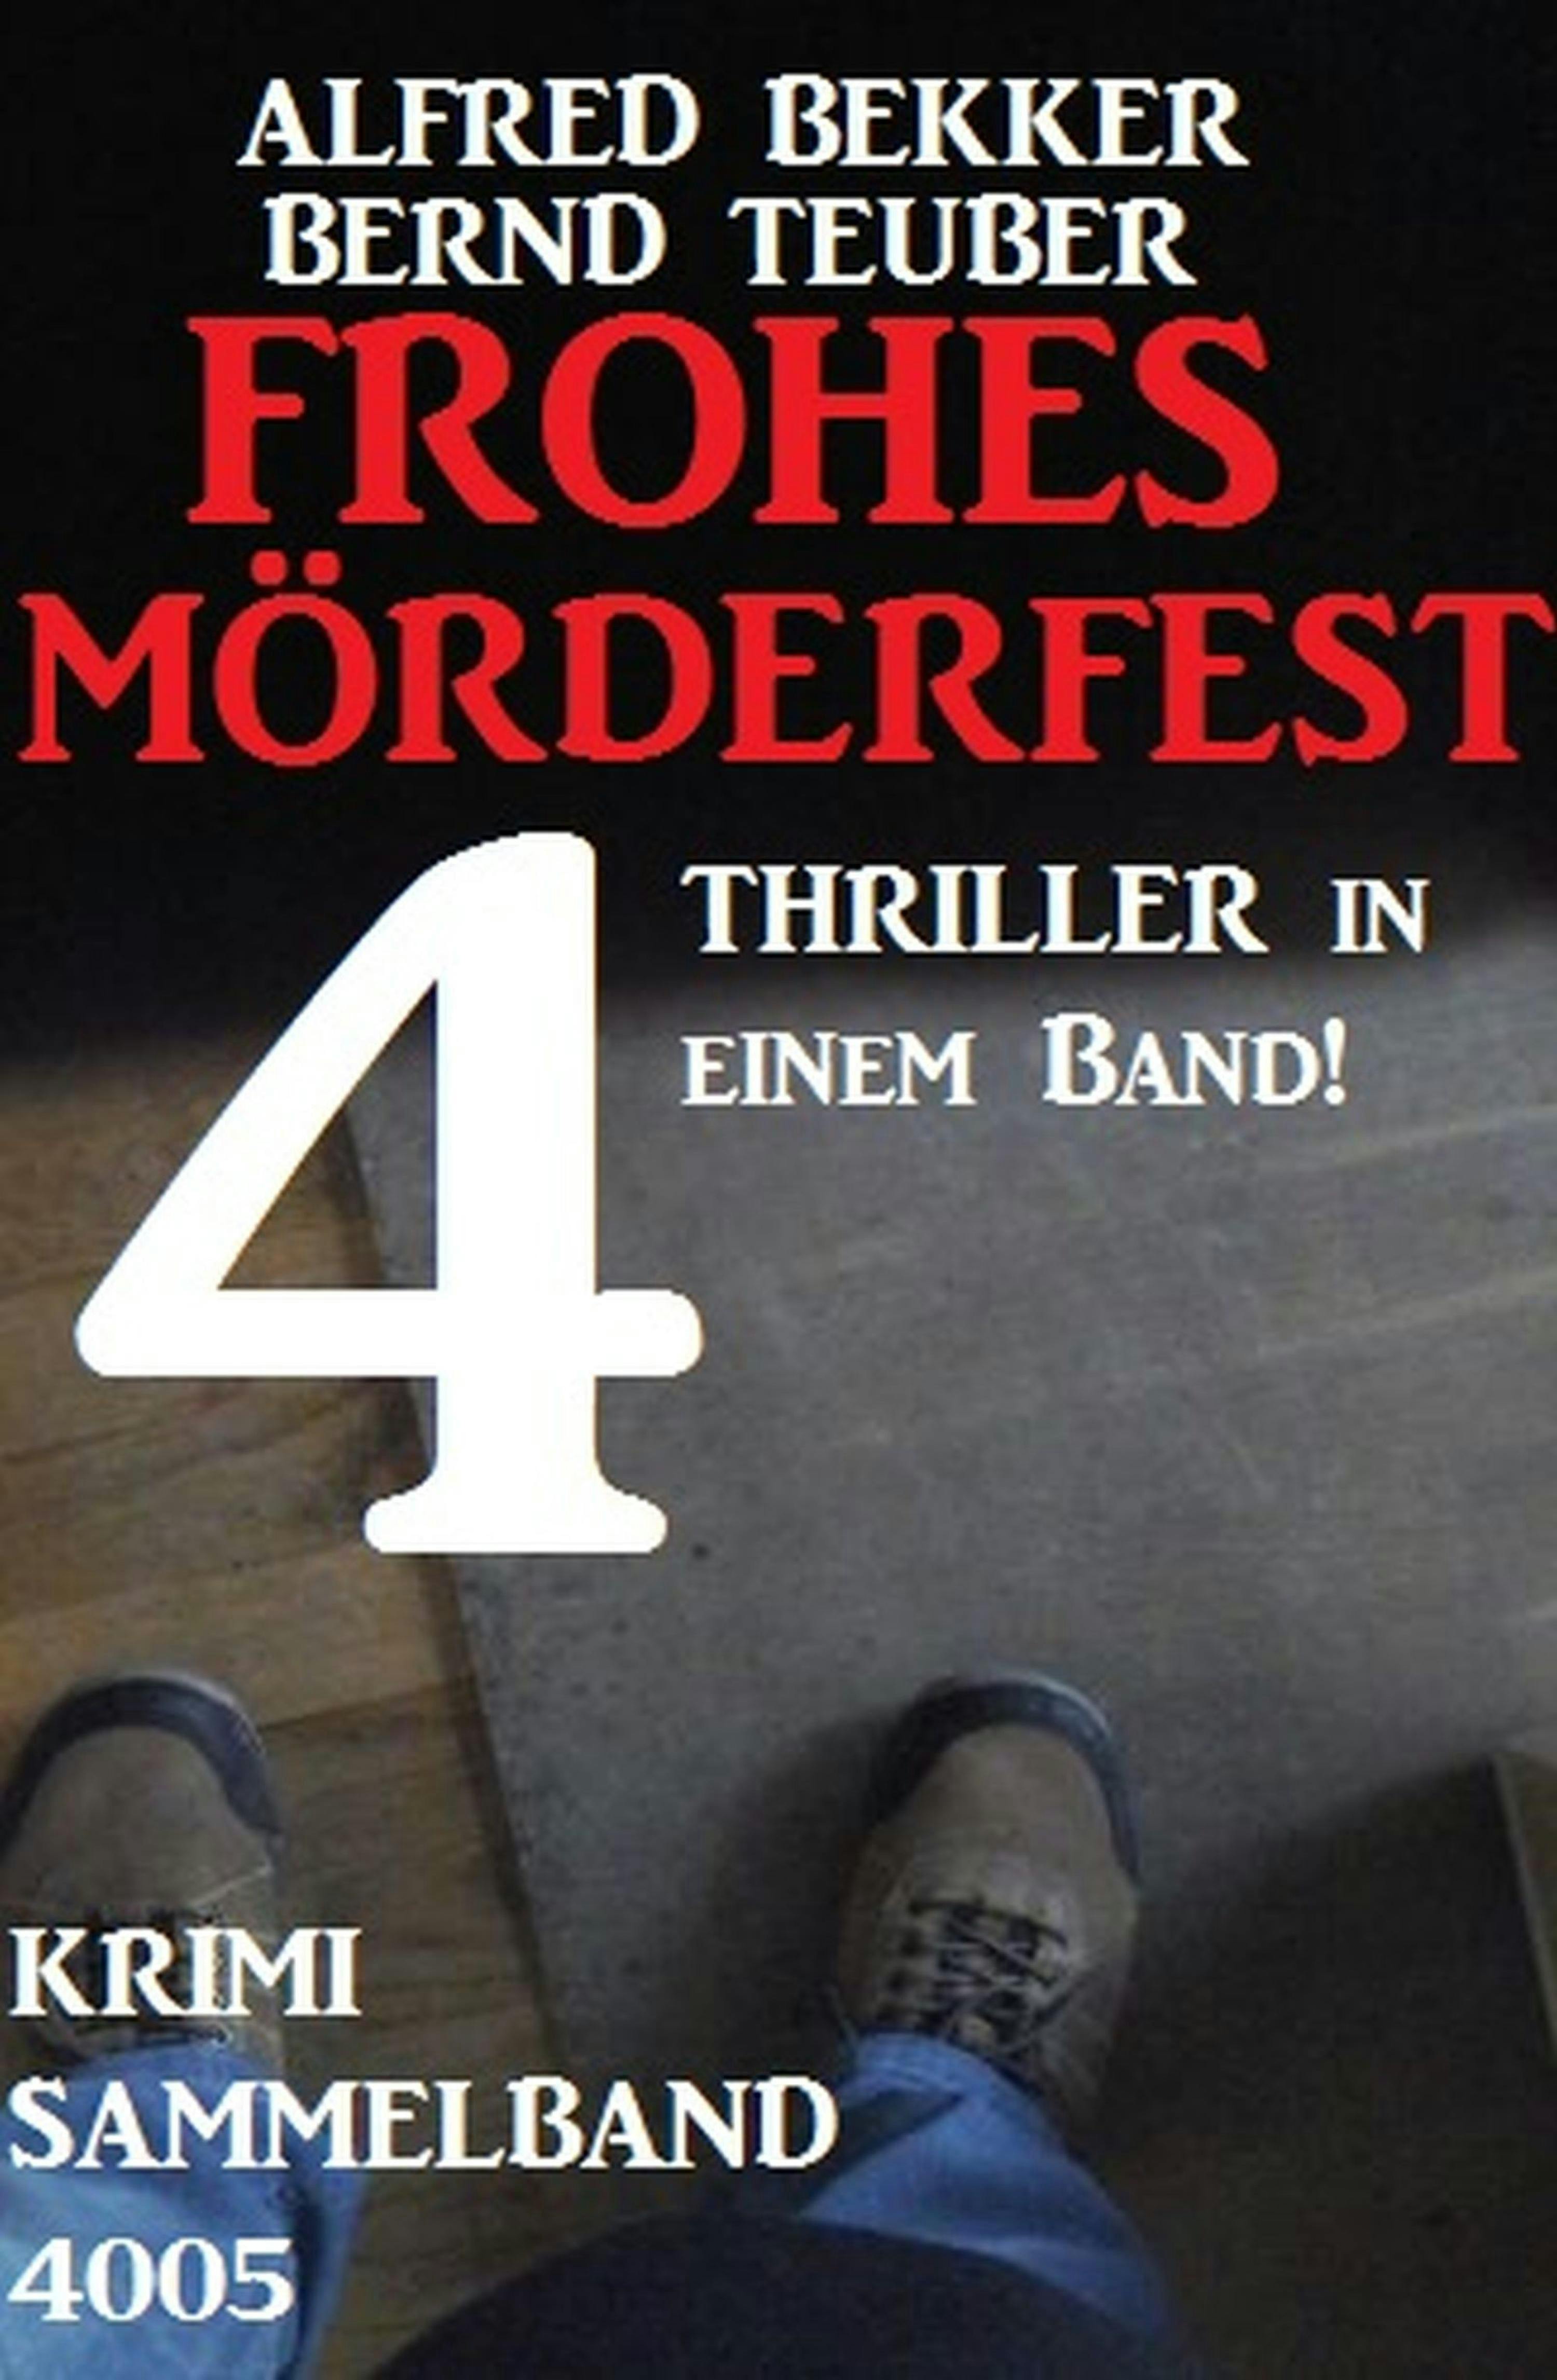 Krimi Sammelband 4005: Frohes Mörderfest - 4 Thriller in einem Band - Alfred Bekker, Bernd Teuber